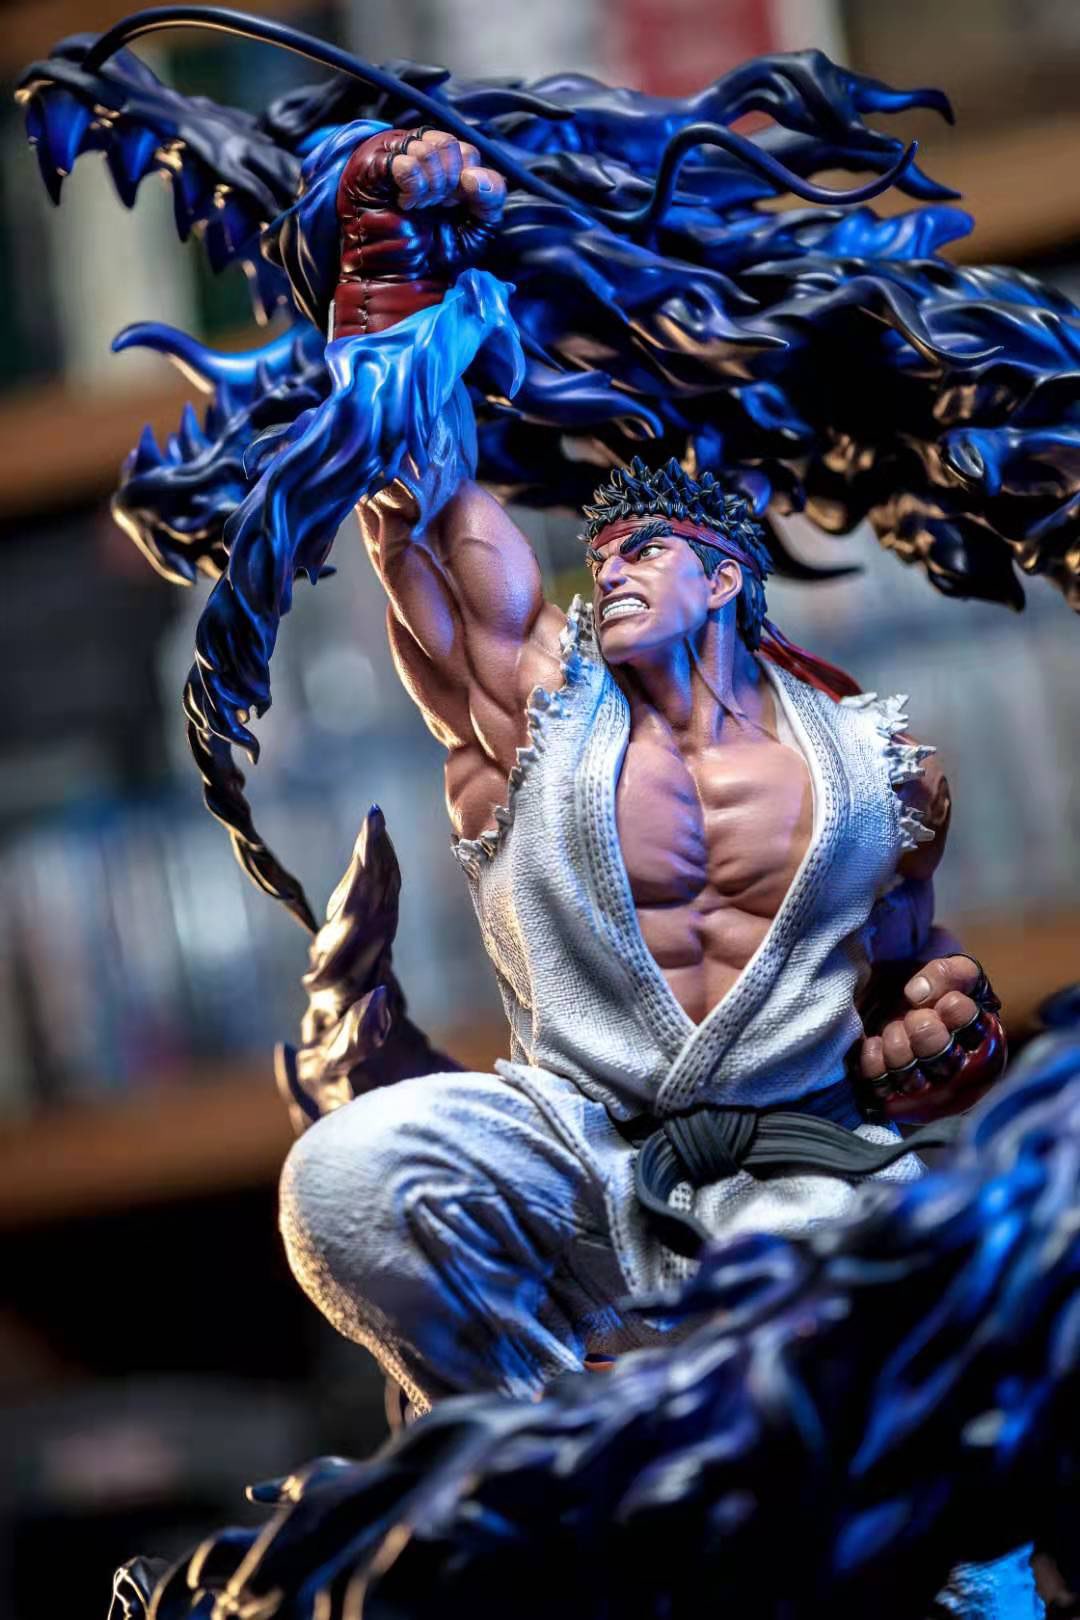 Street Fighter VEGA EXCLUSIVE 1/4 Scale Statue - Spec Fiction Shop